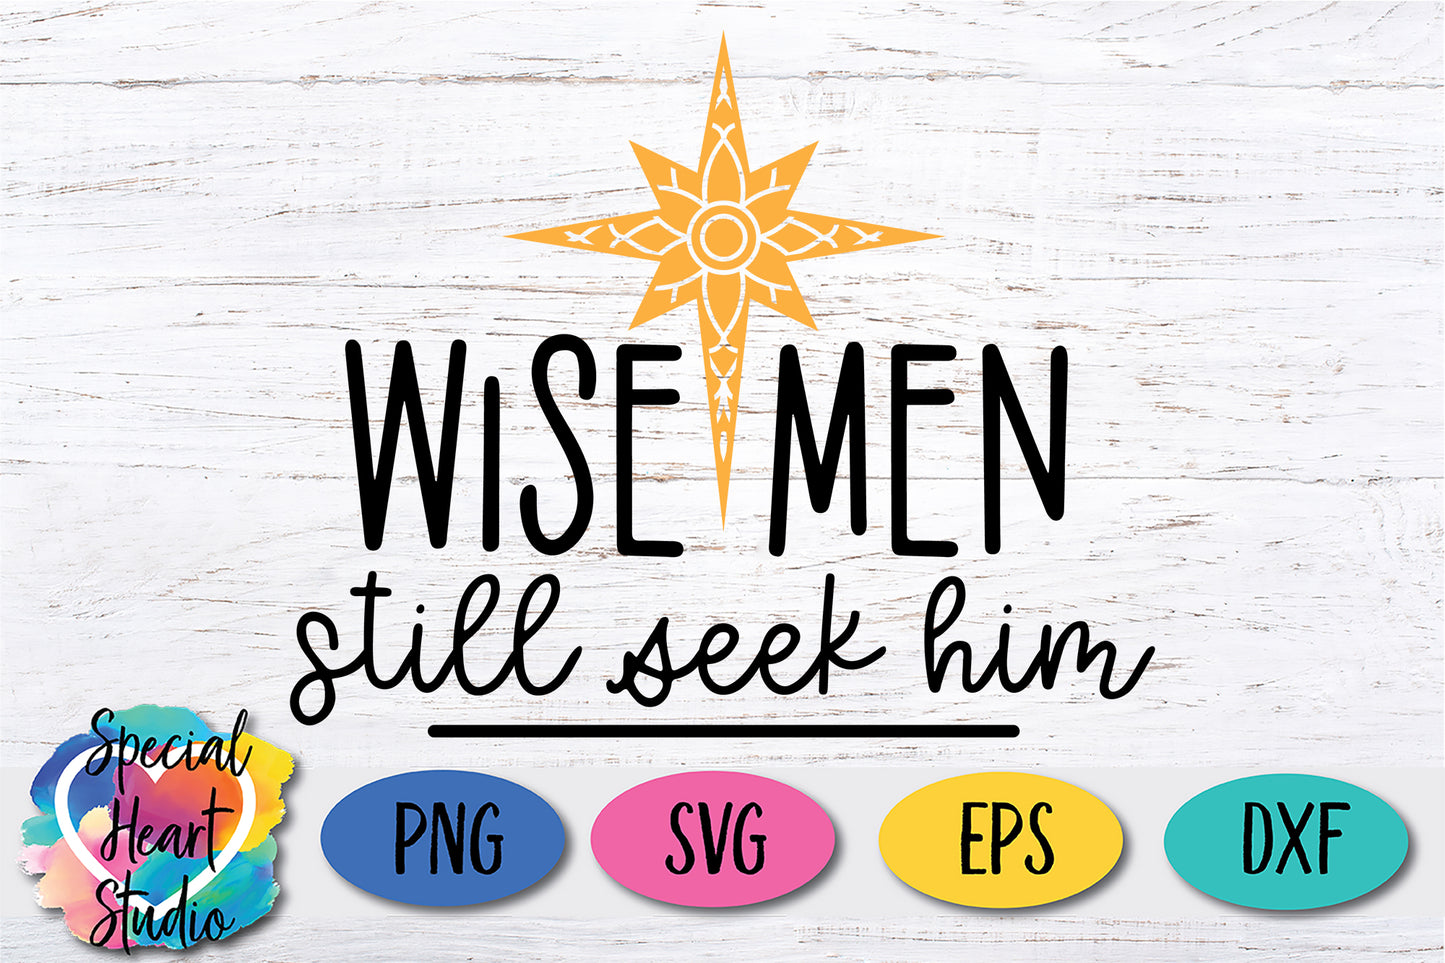 Wise Men Still Seek Him